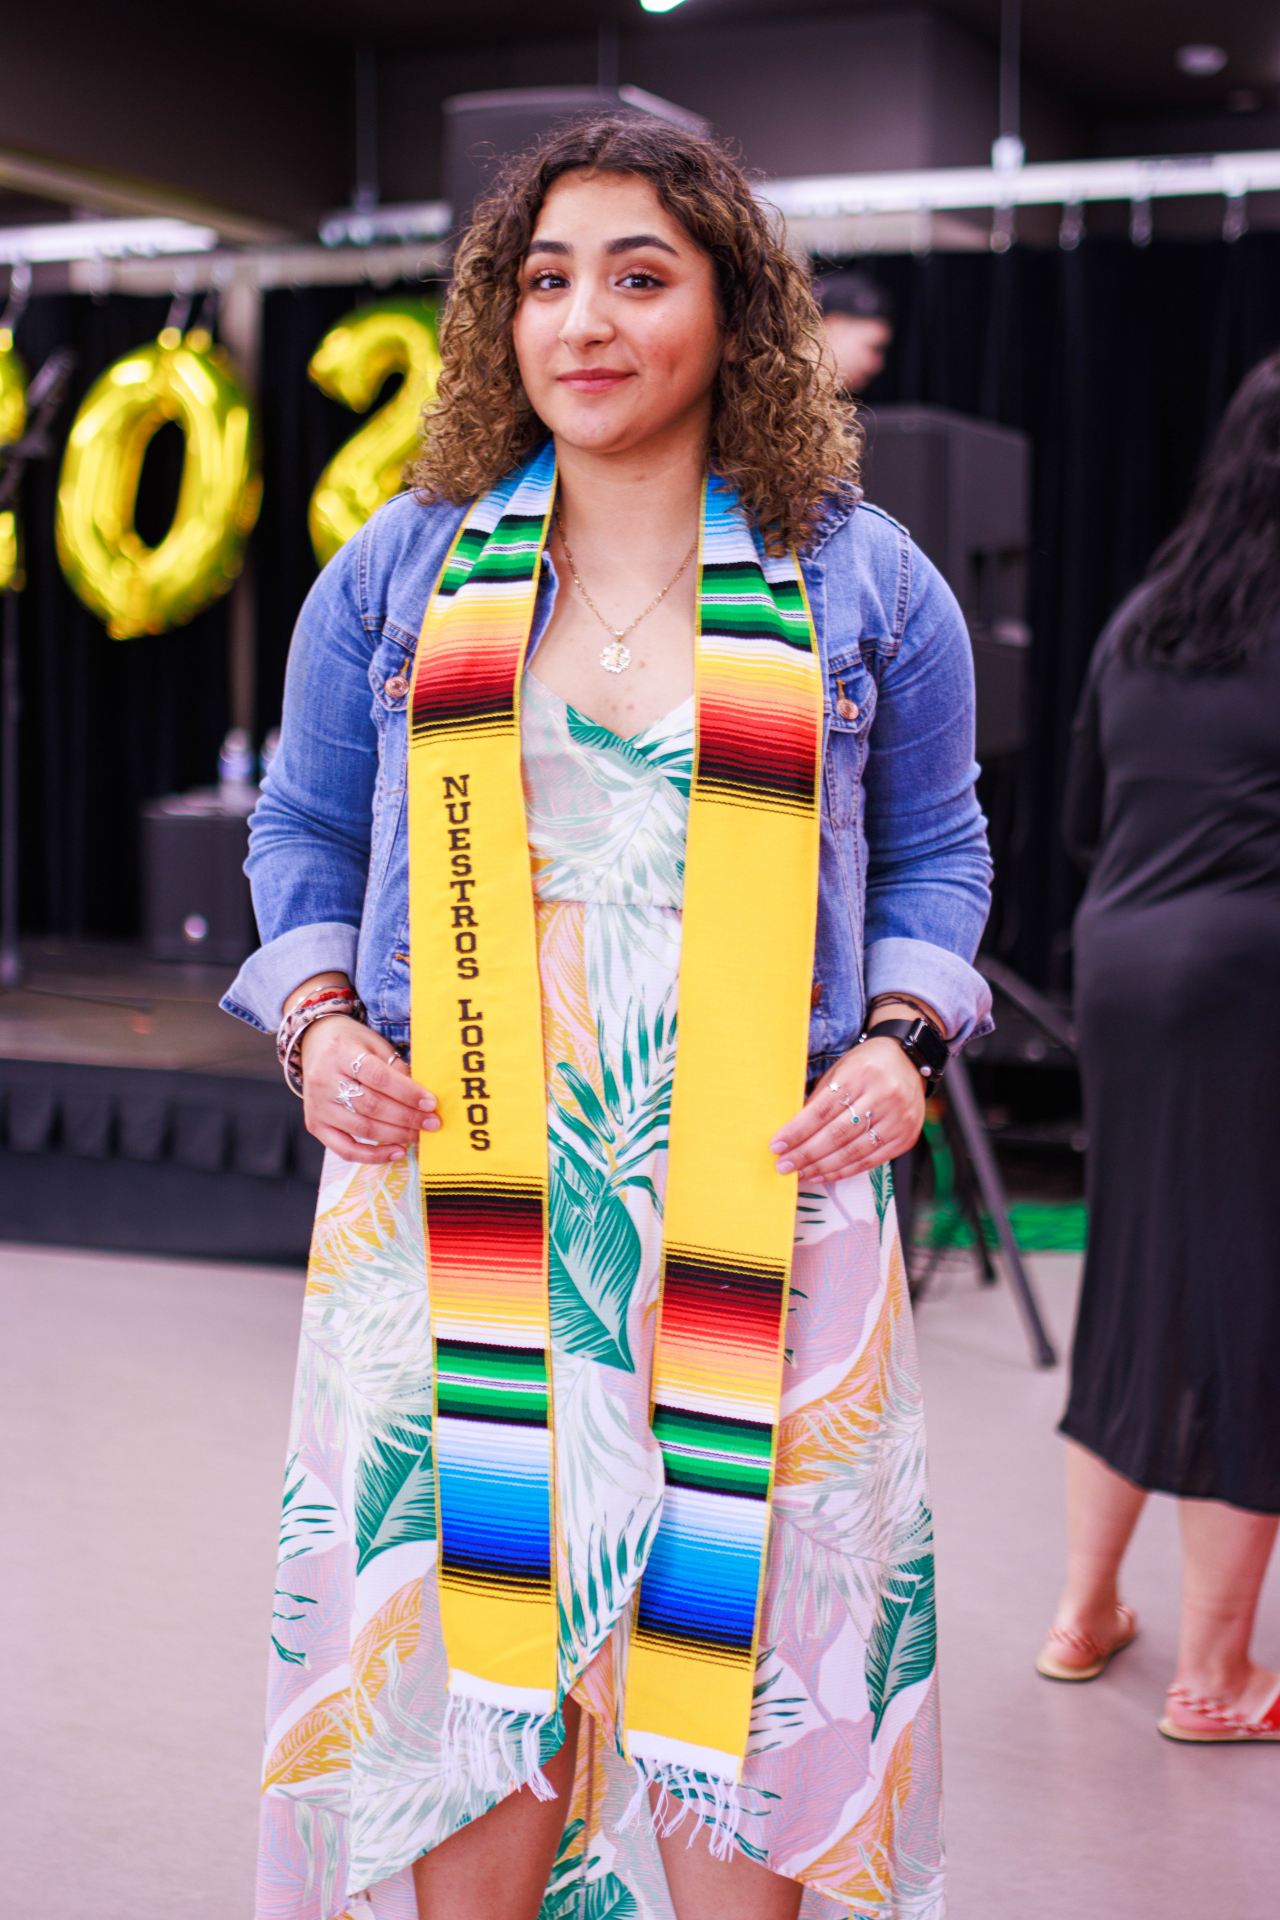 A graduate poses with their graduation sash.